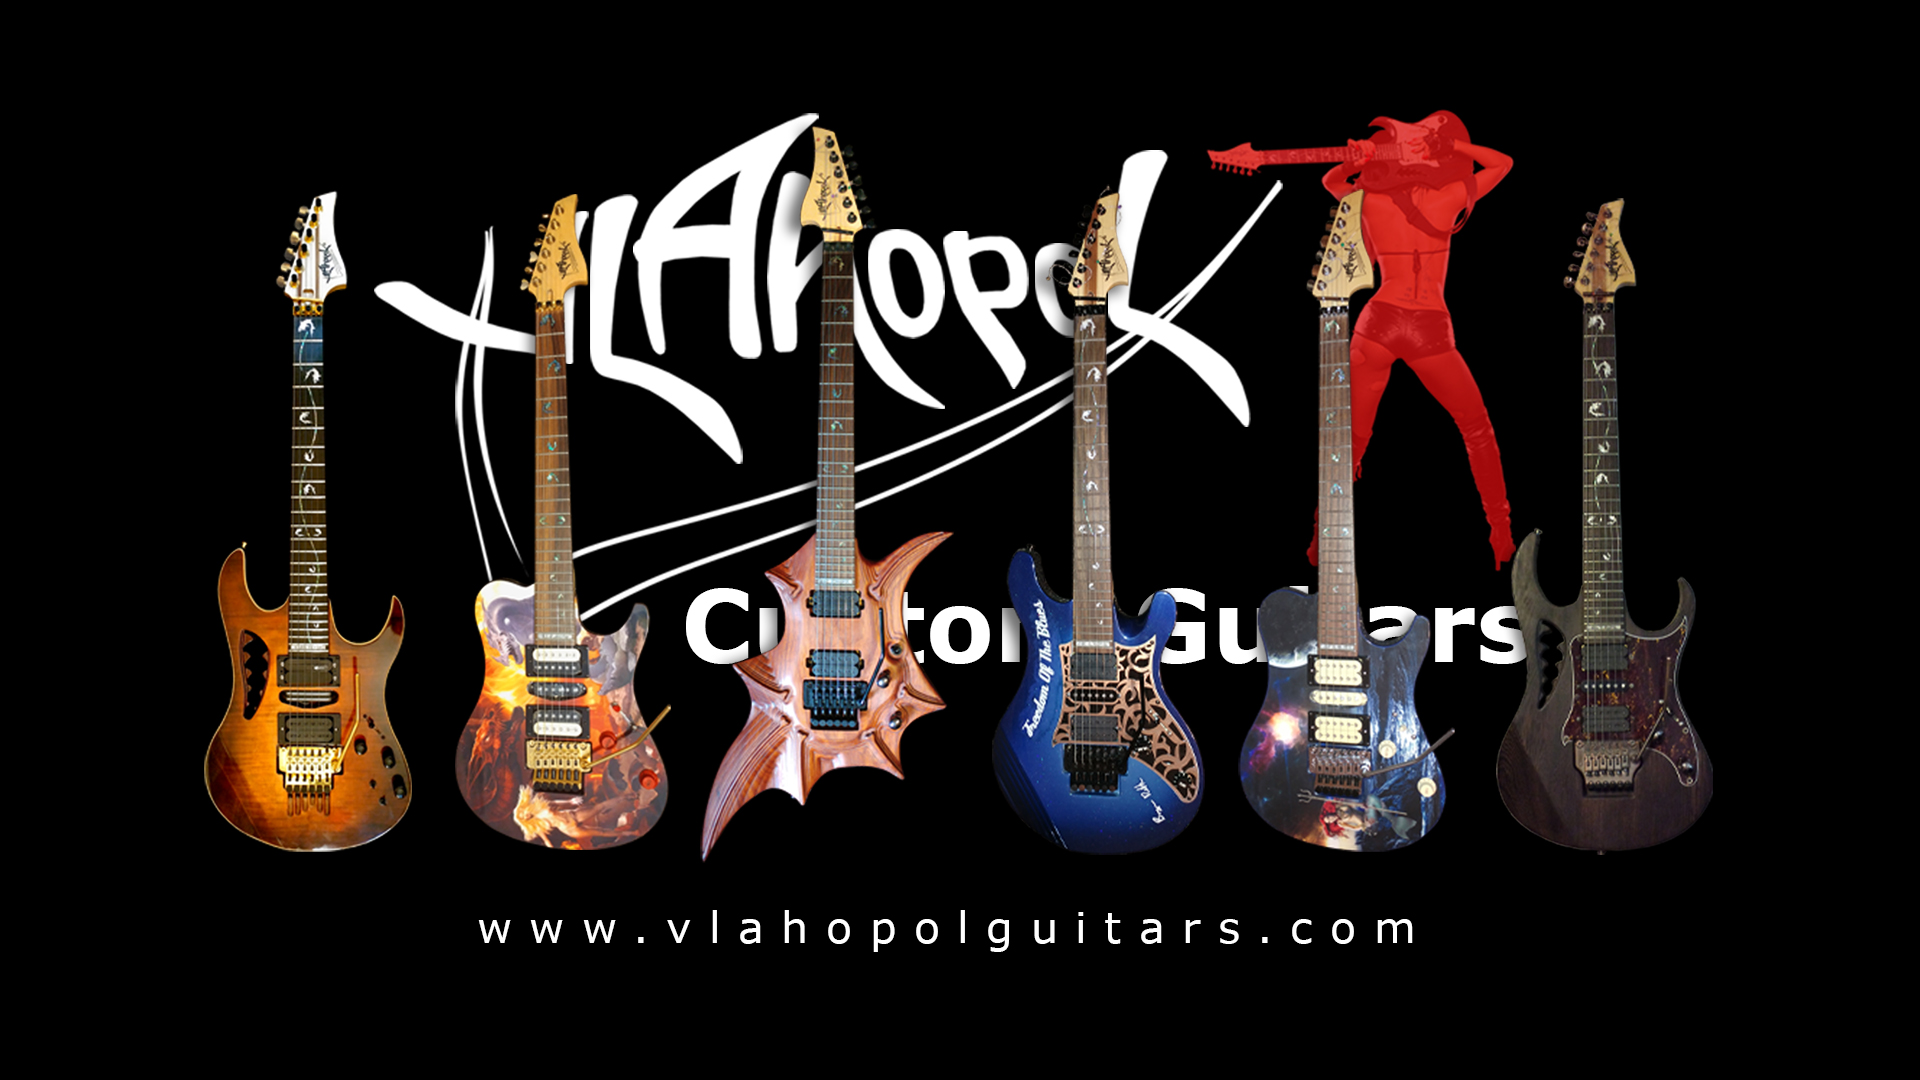 Permalink to: Vlahopol Custom Guitars